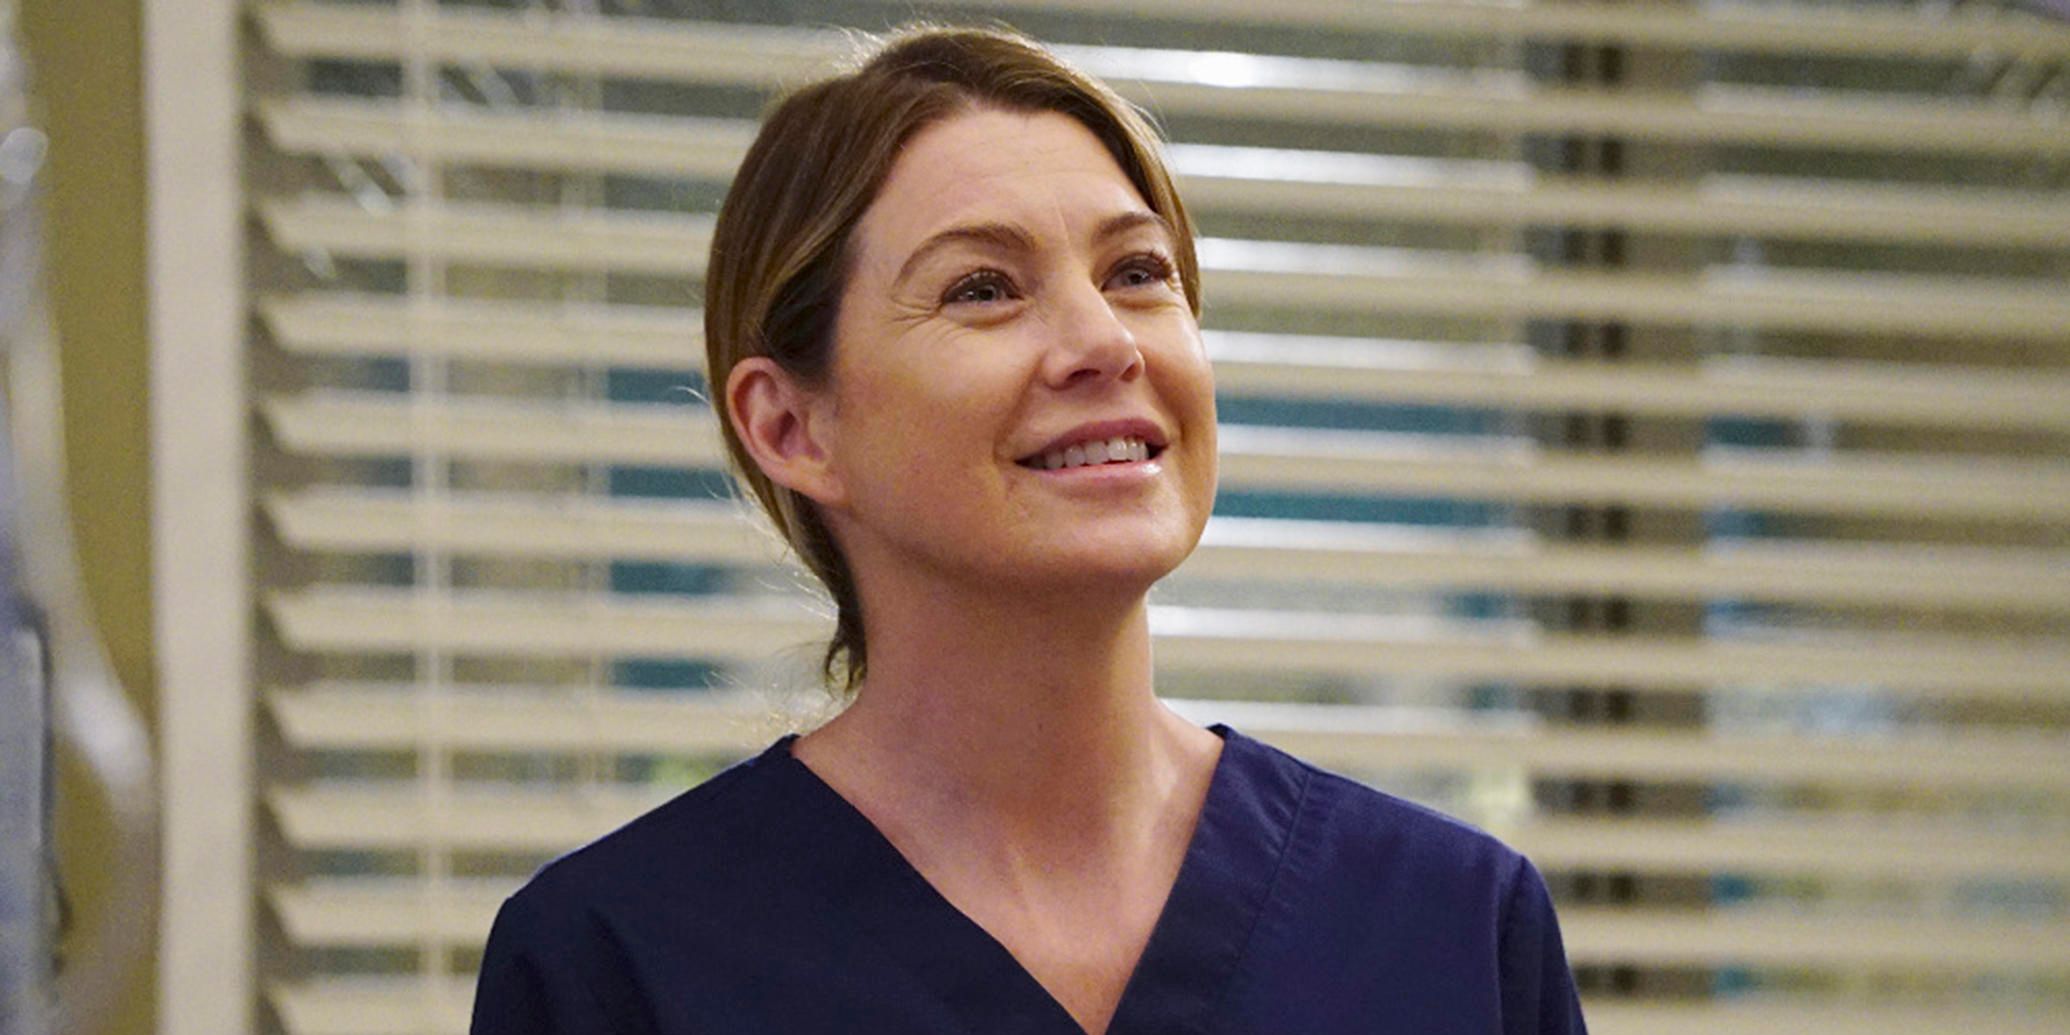 Grey's Anatomy Ellen Pompeo as Meredith Grey smiling